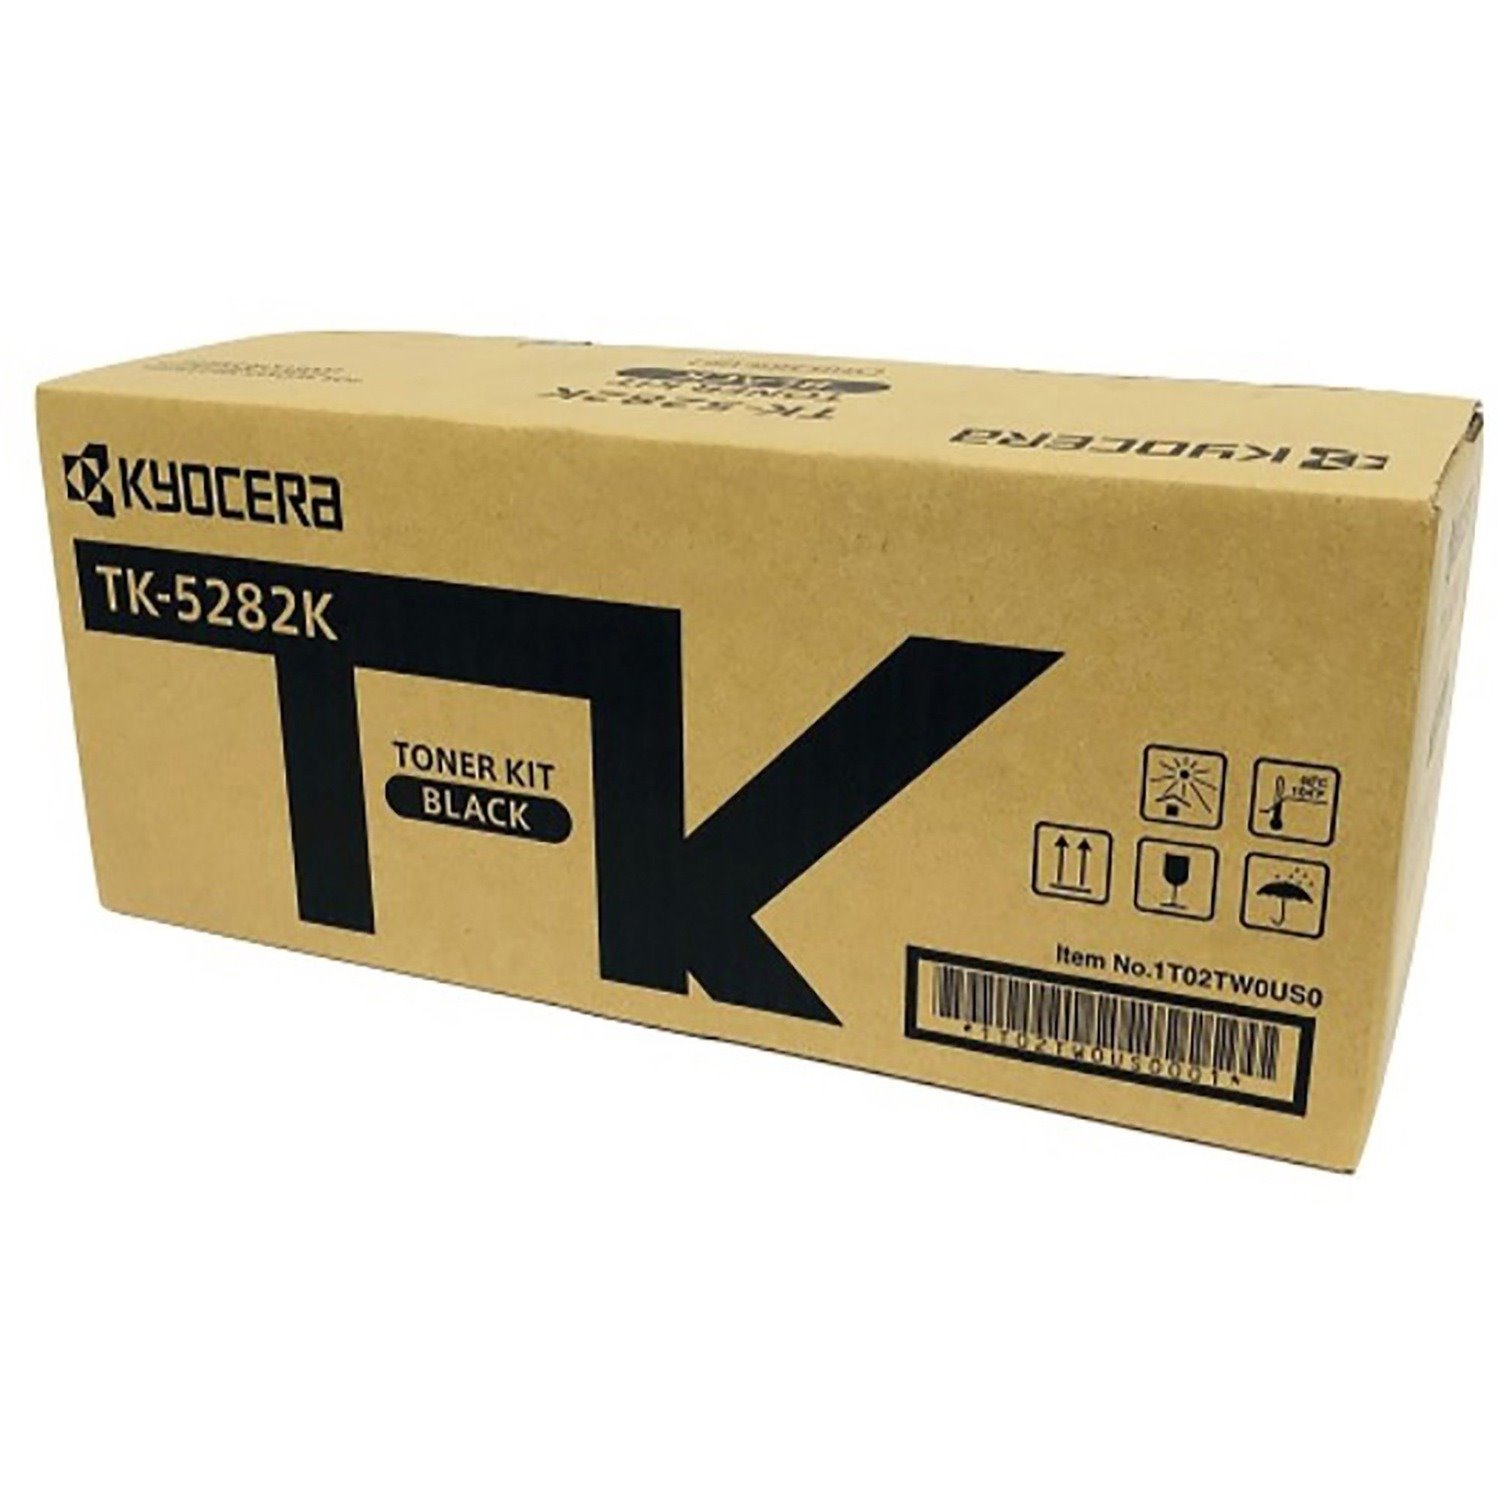 Kyocera TK-5282K Original Laser Toner Cartridge - Black - 1 Each